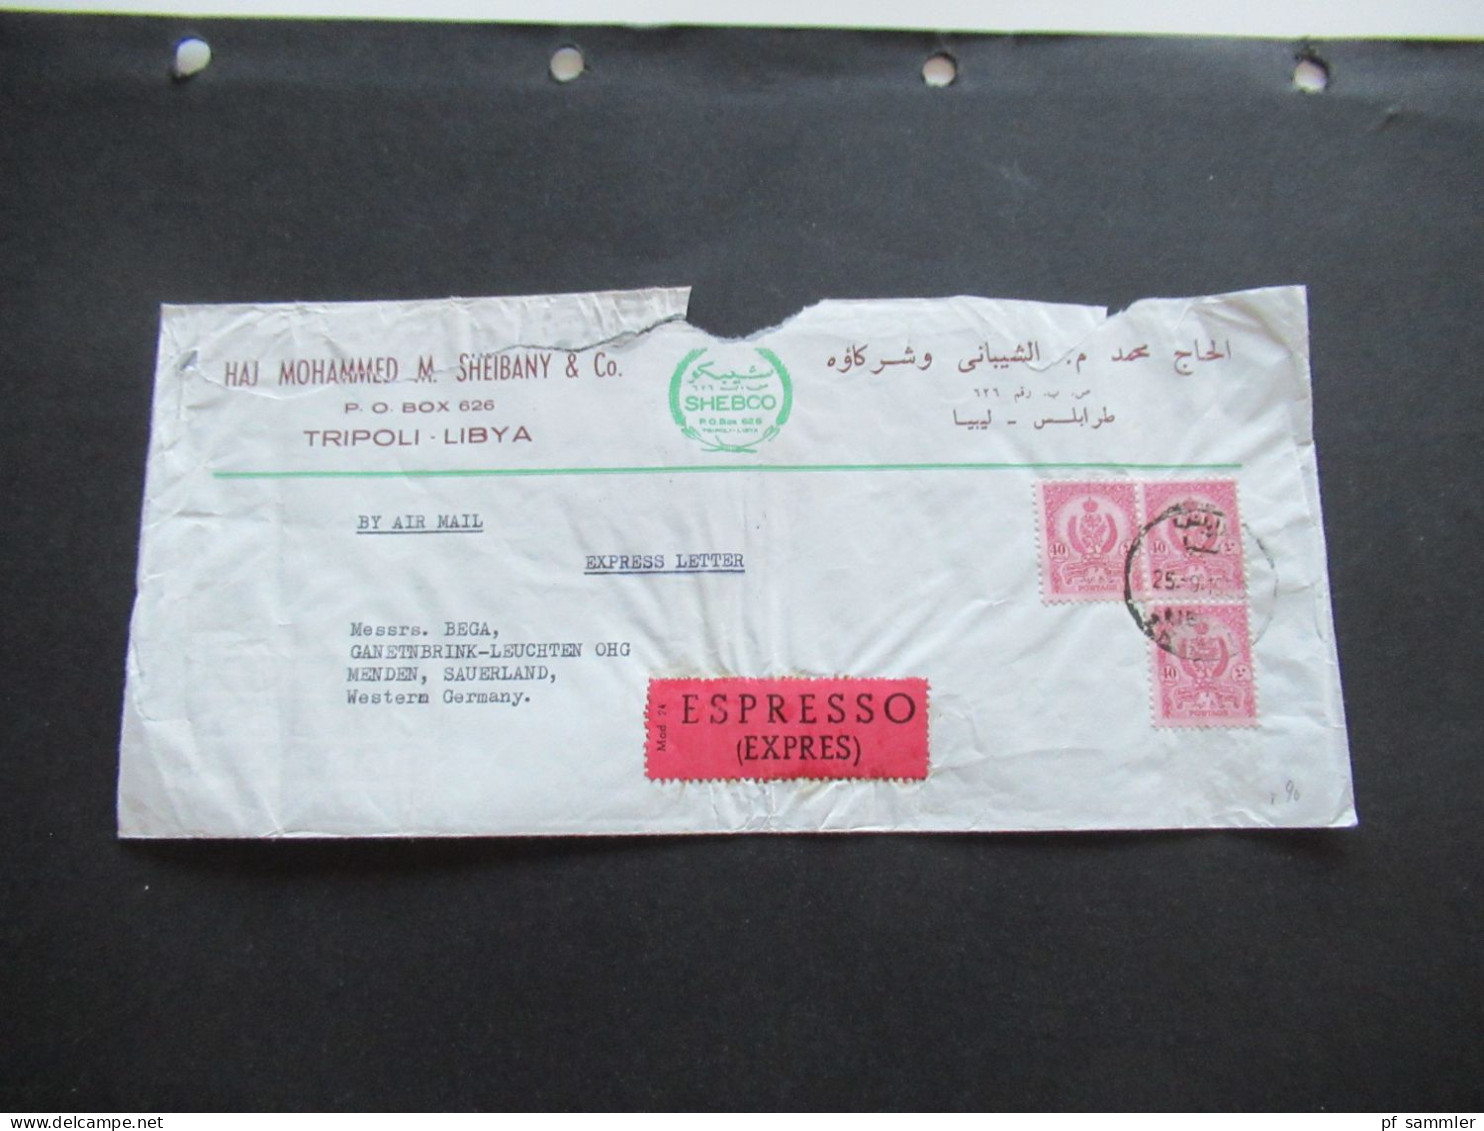 Afrika Libya Air Mail 2x Firmenumschlag Haj Mohammed M. Sheibany & Co. Tripoli Libya 1x Espresso / Express Beleg - Libya